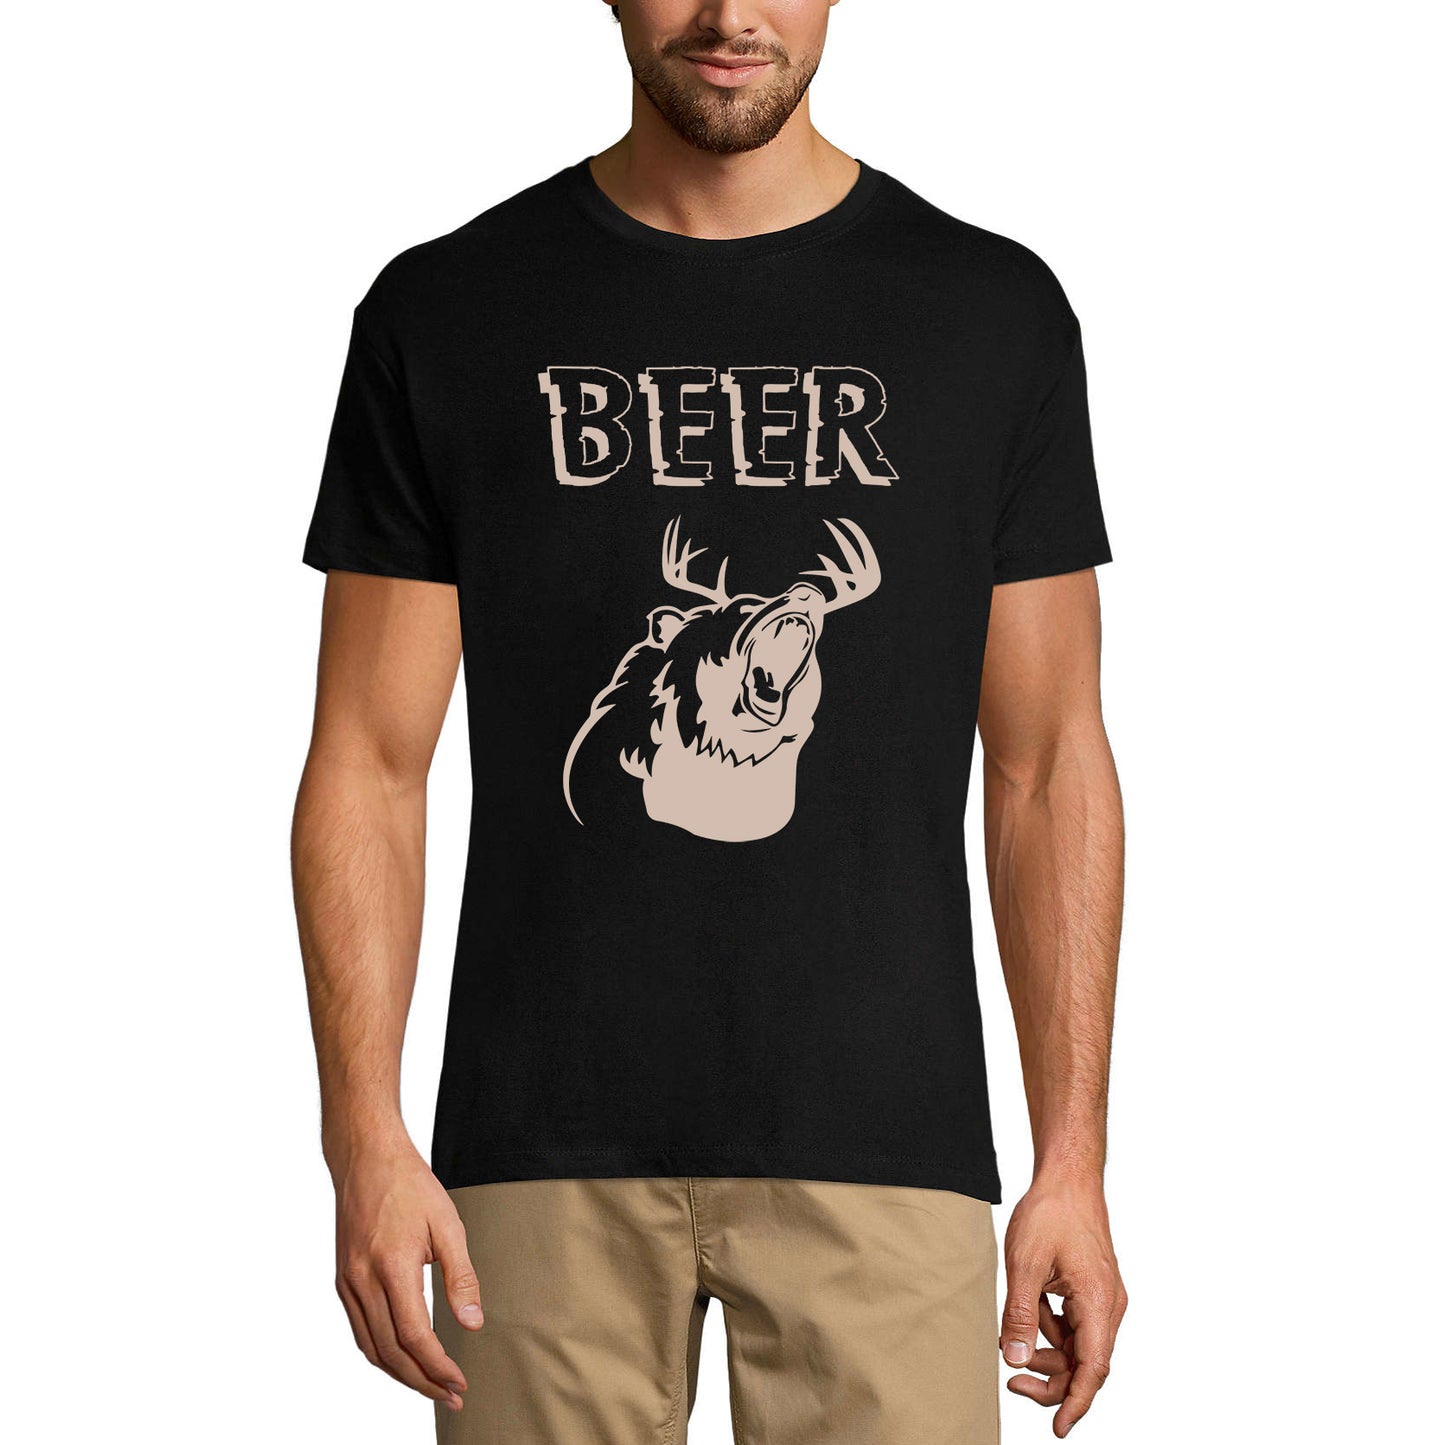 ULTRABASIC Men's Graphic T-Shirt Beer Bear - Funny Sarcasm Humor Tee Shirt